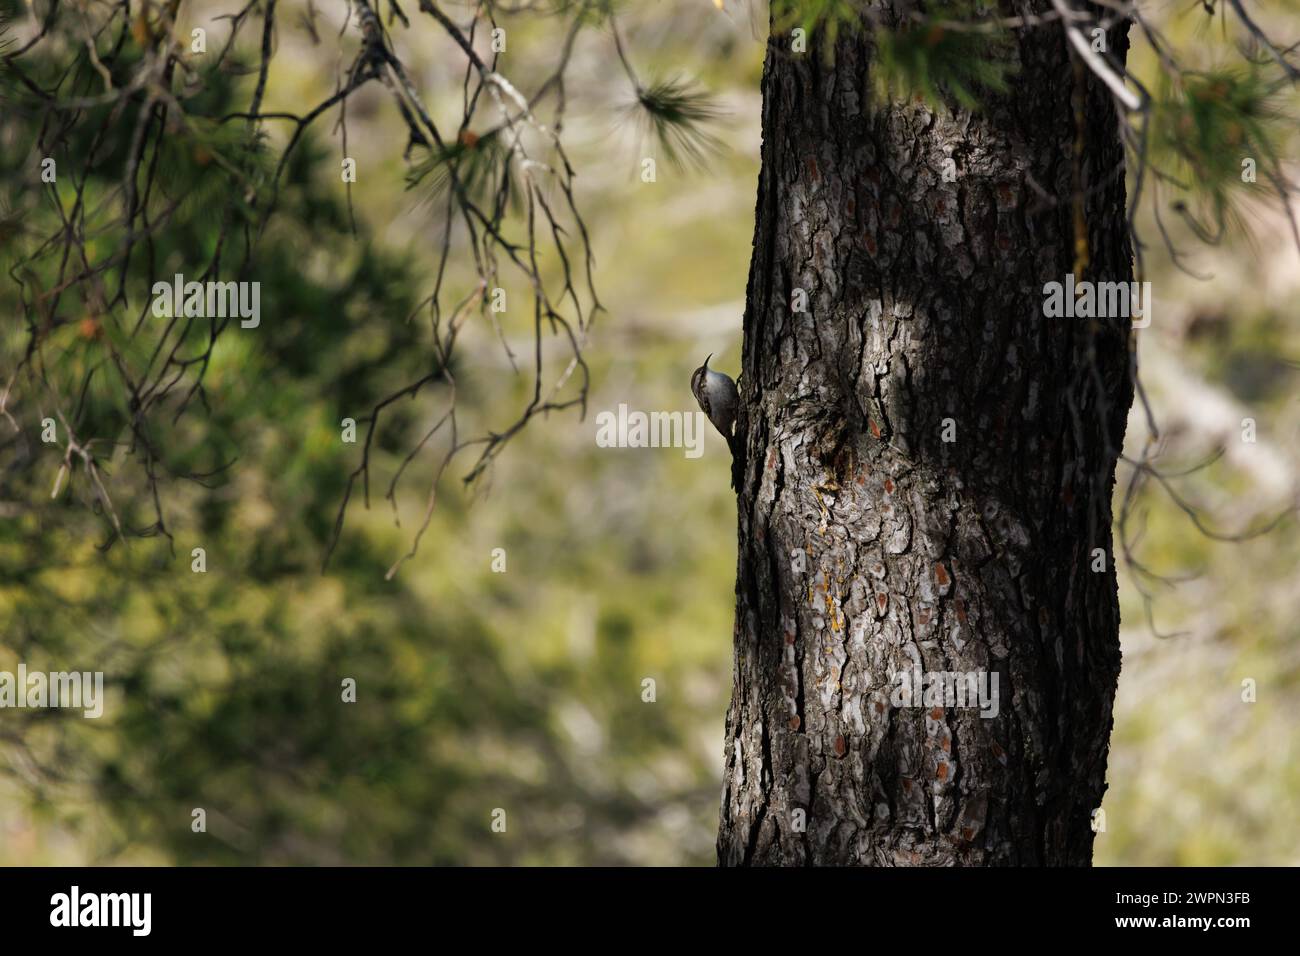 European treecreeper (Certhia brachydactyla) climbing the trunk of a pine tree in the forest, Alcoy, Spain Stock Photo